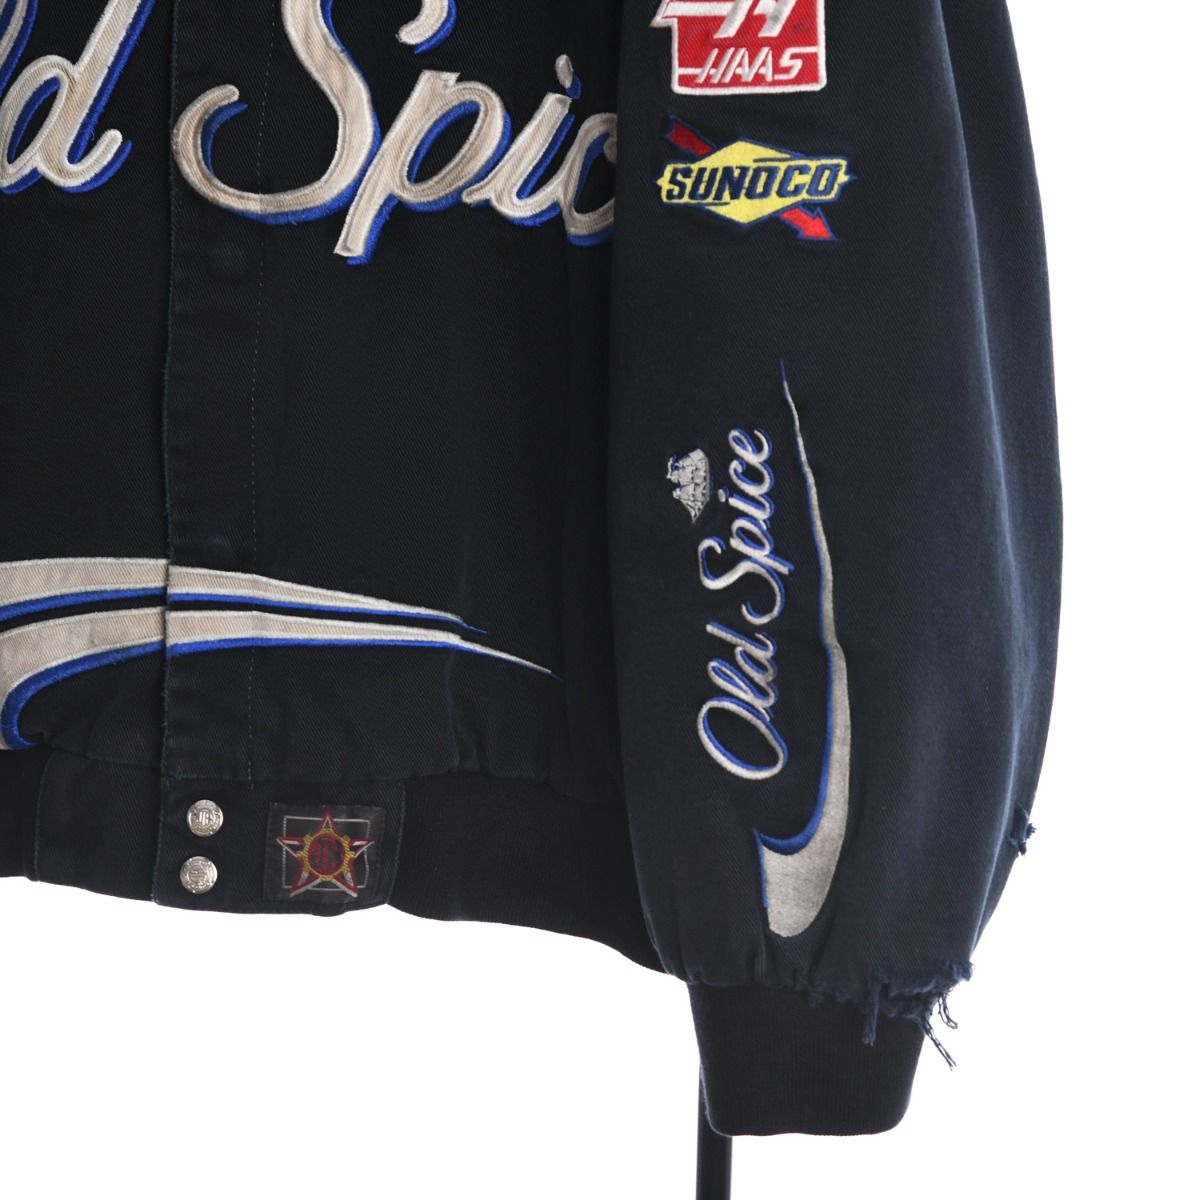 NASCAR Old Spice Racing Jacket